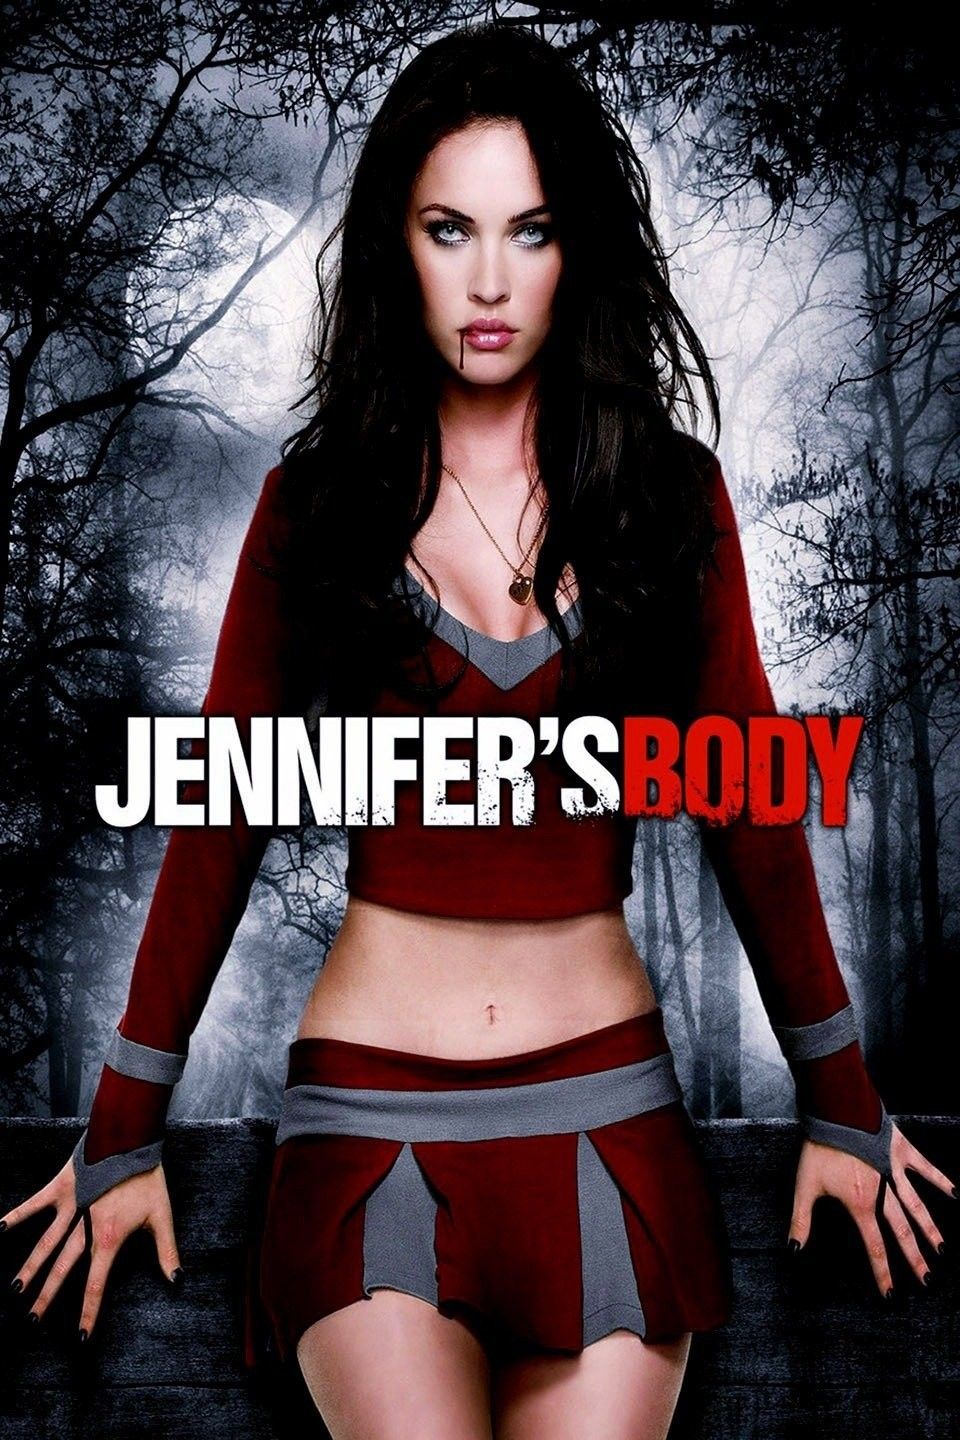 Megan Fox on the Jennifer's Body Poster